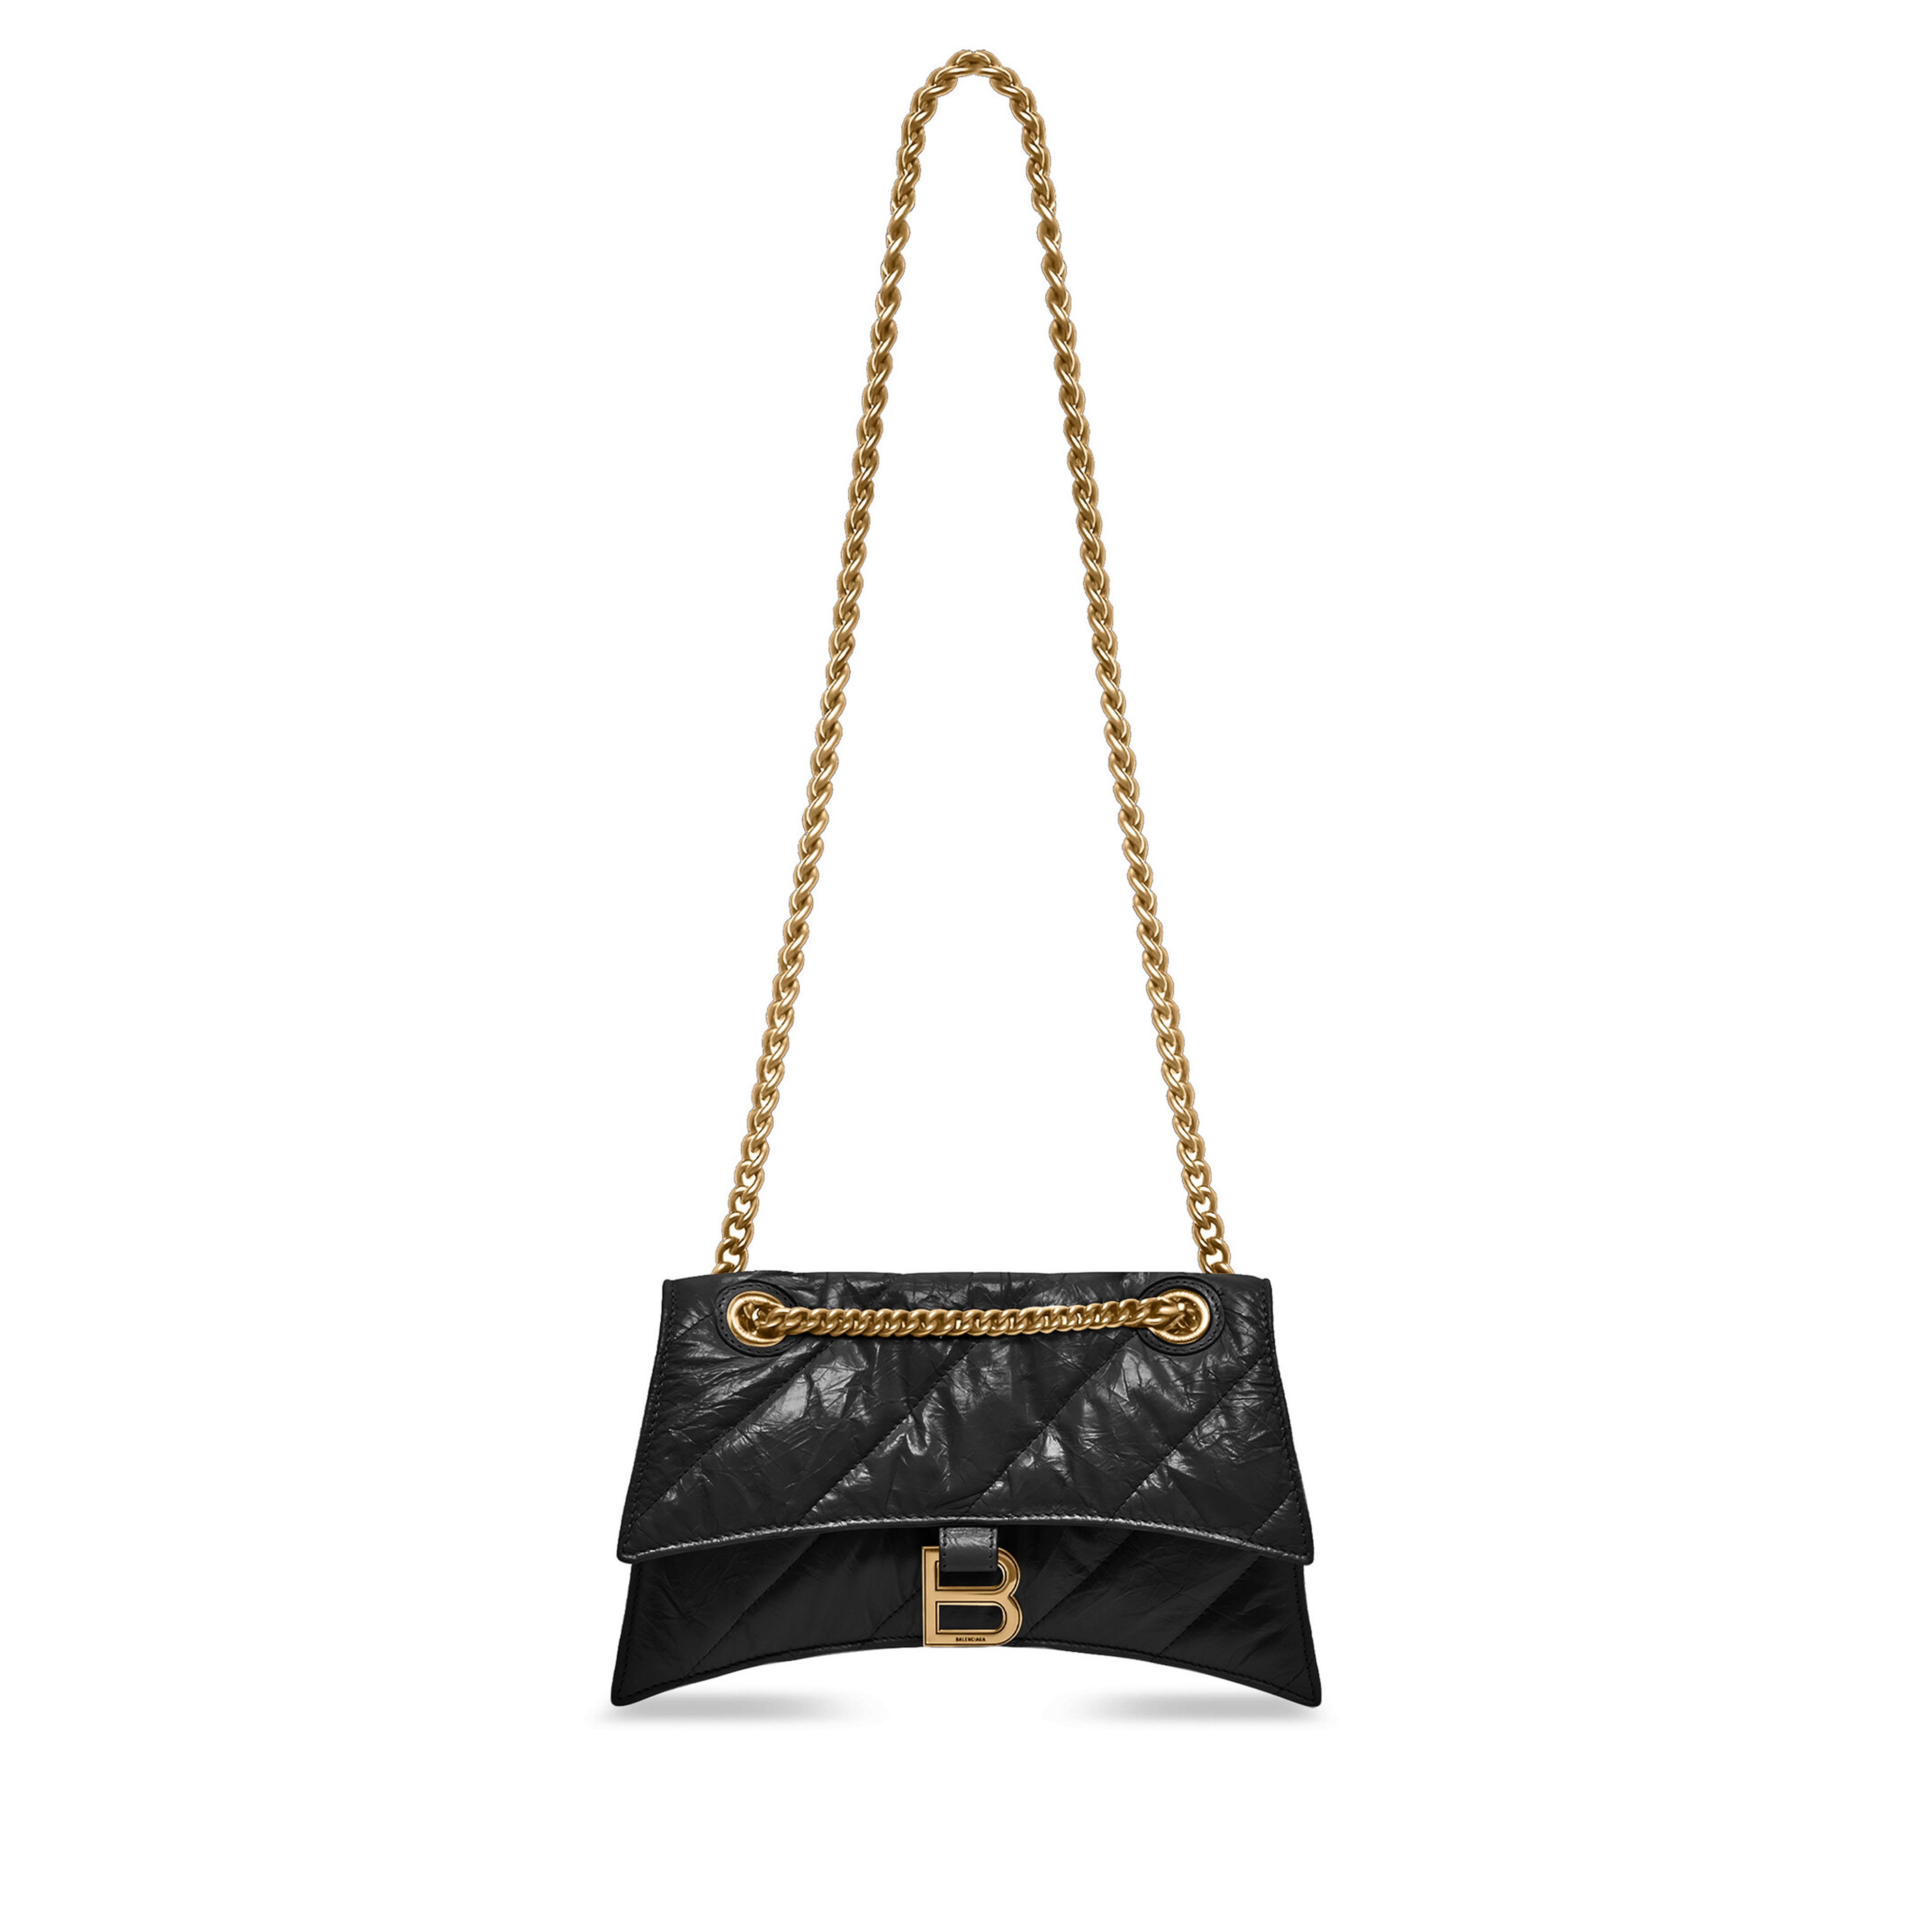 Balenciaga Has a Brand New CelebApproved It Bag  Vogue